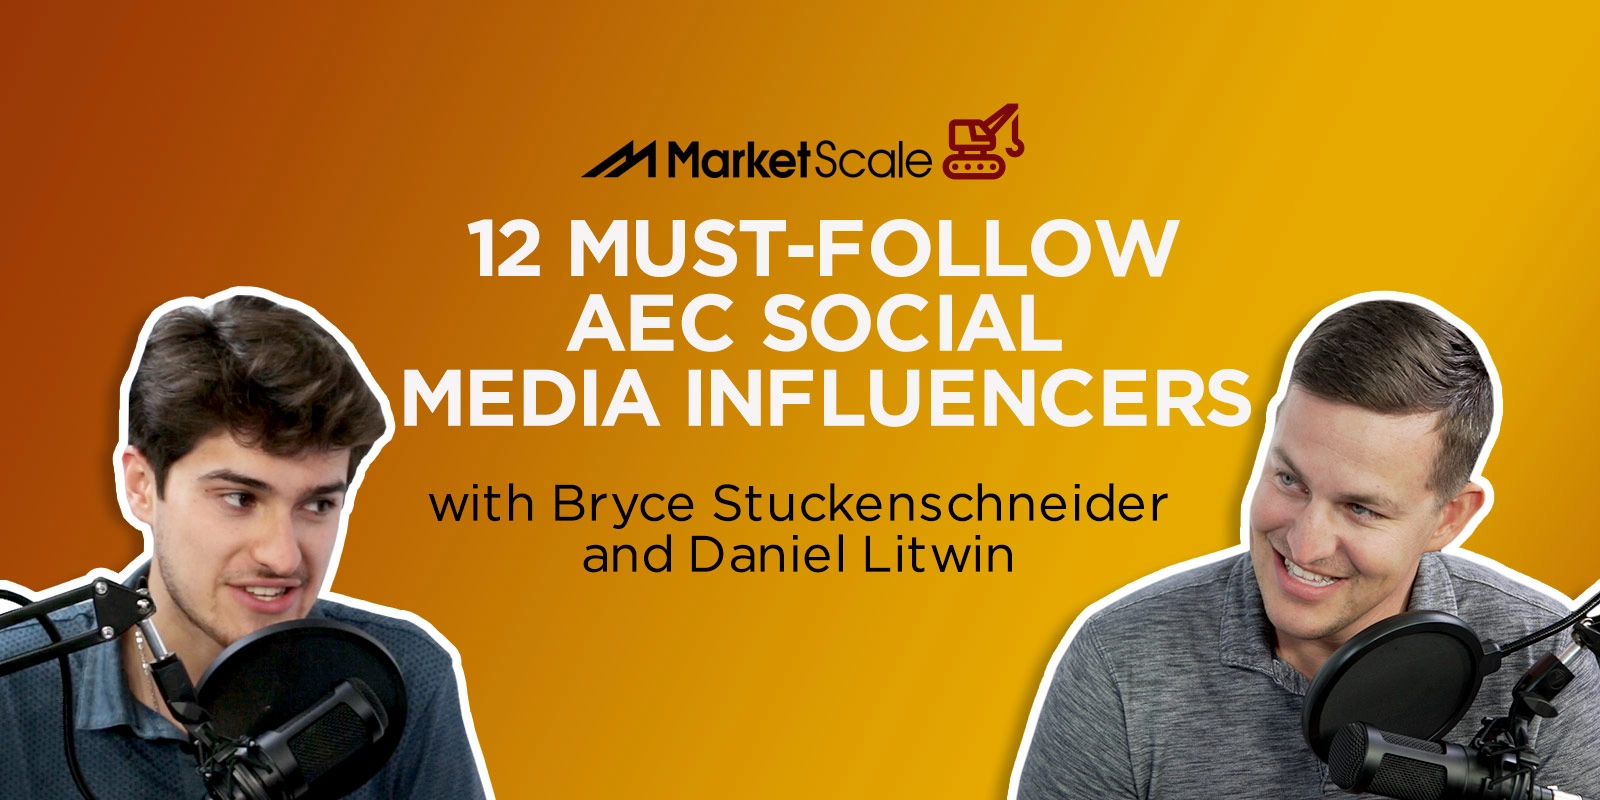 12 Must-Follow AEC Social Media Influencers with Bryce Stuckenschneider